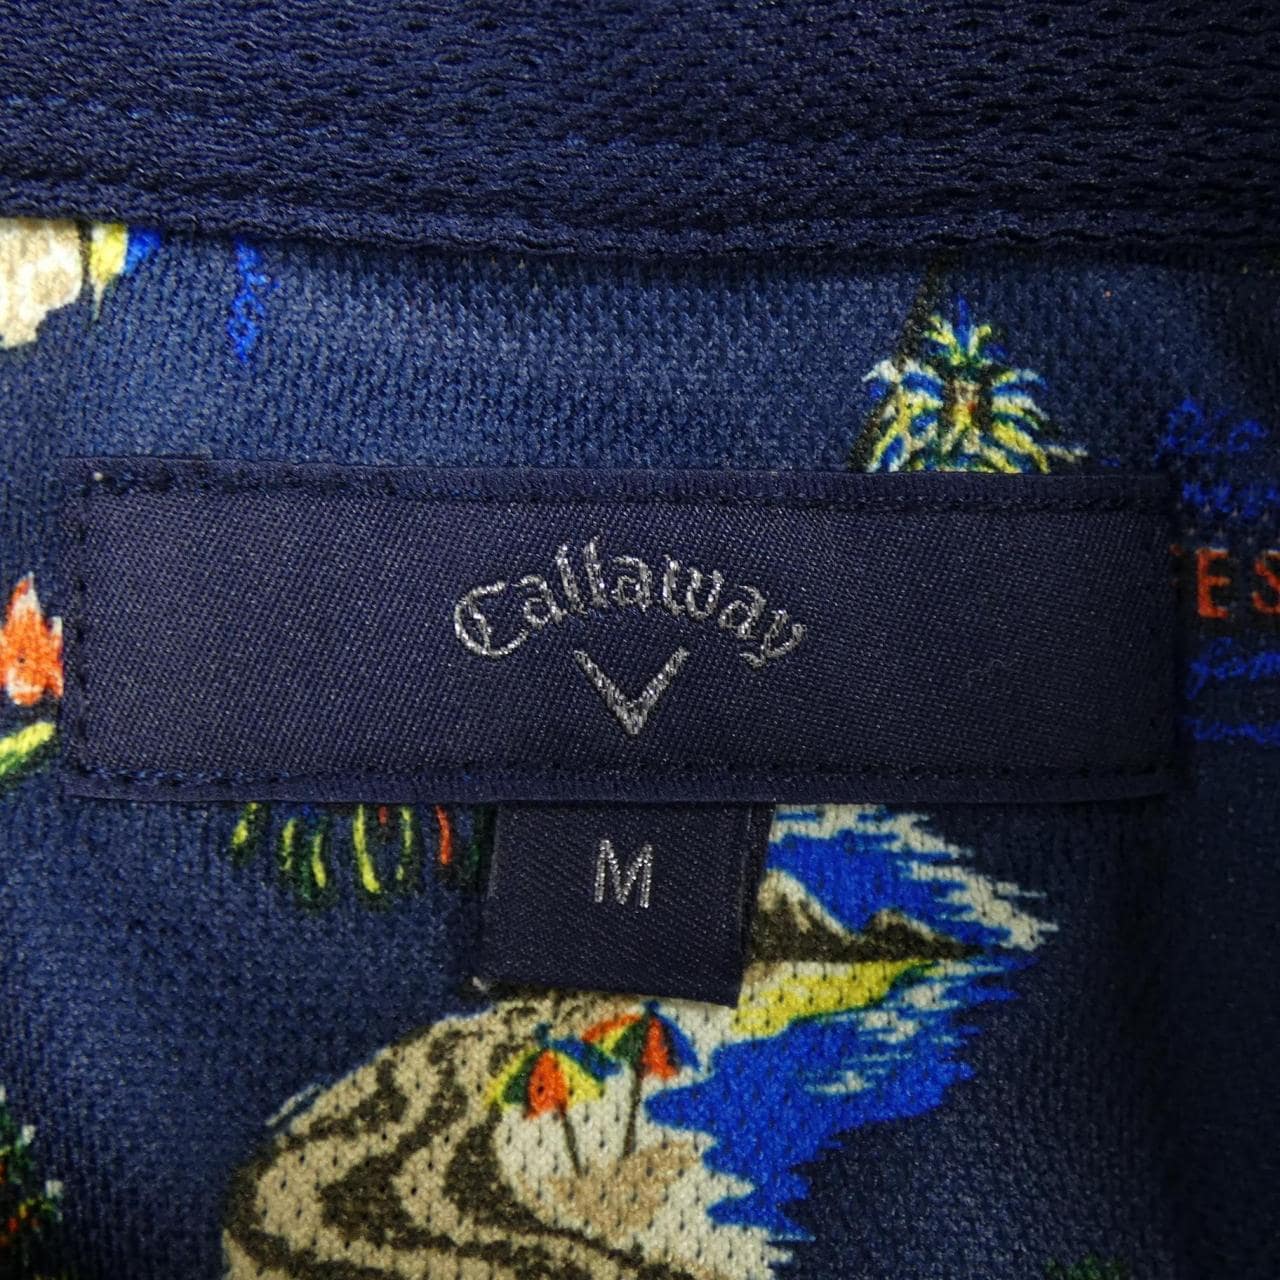 Carolway callaway POLO衫